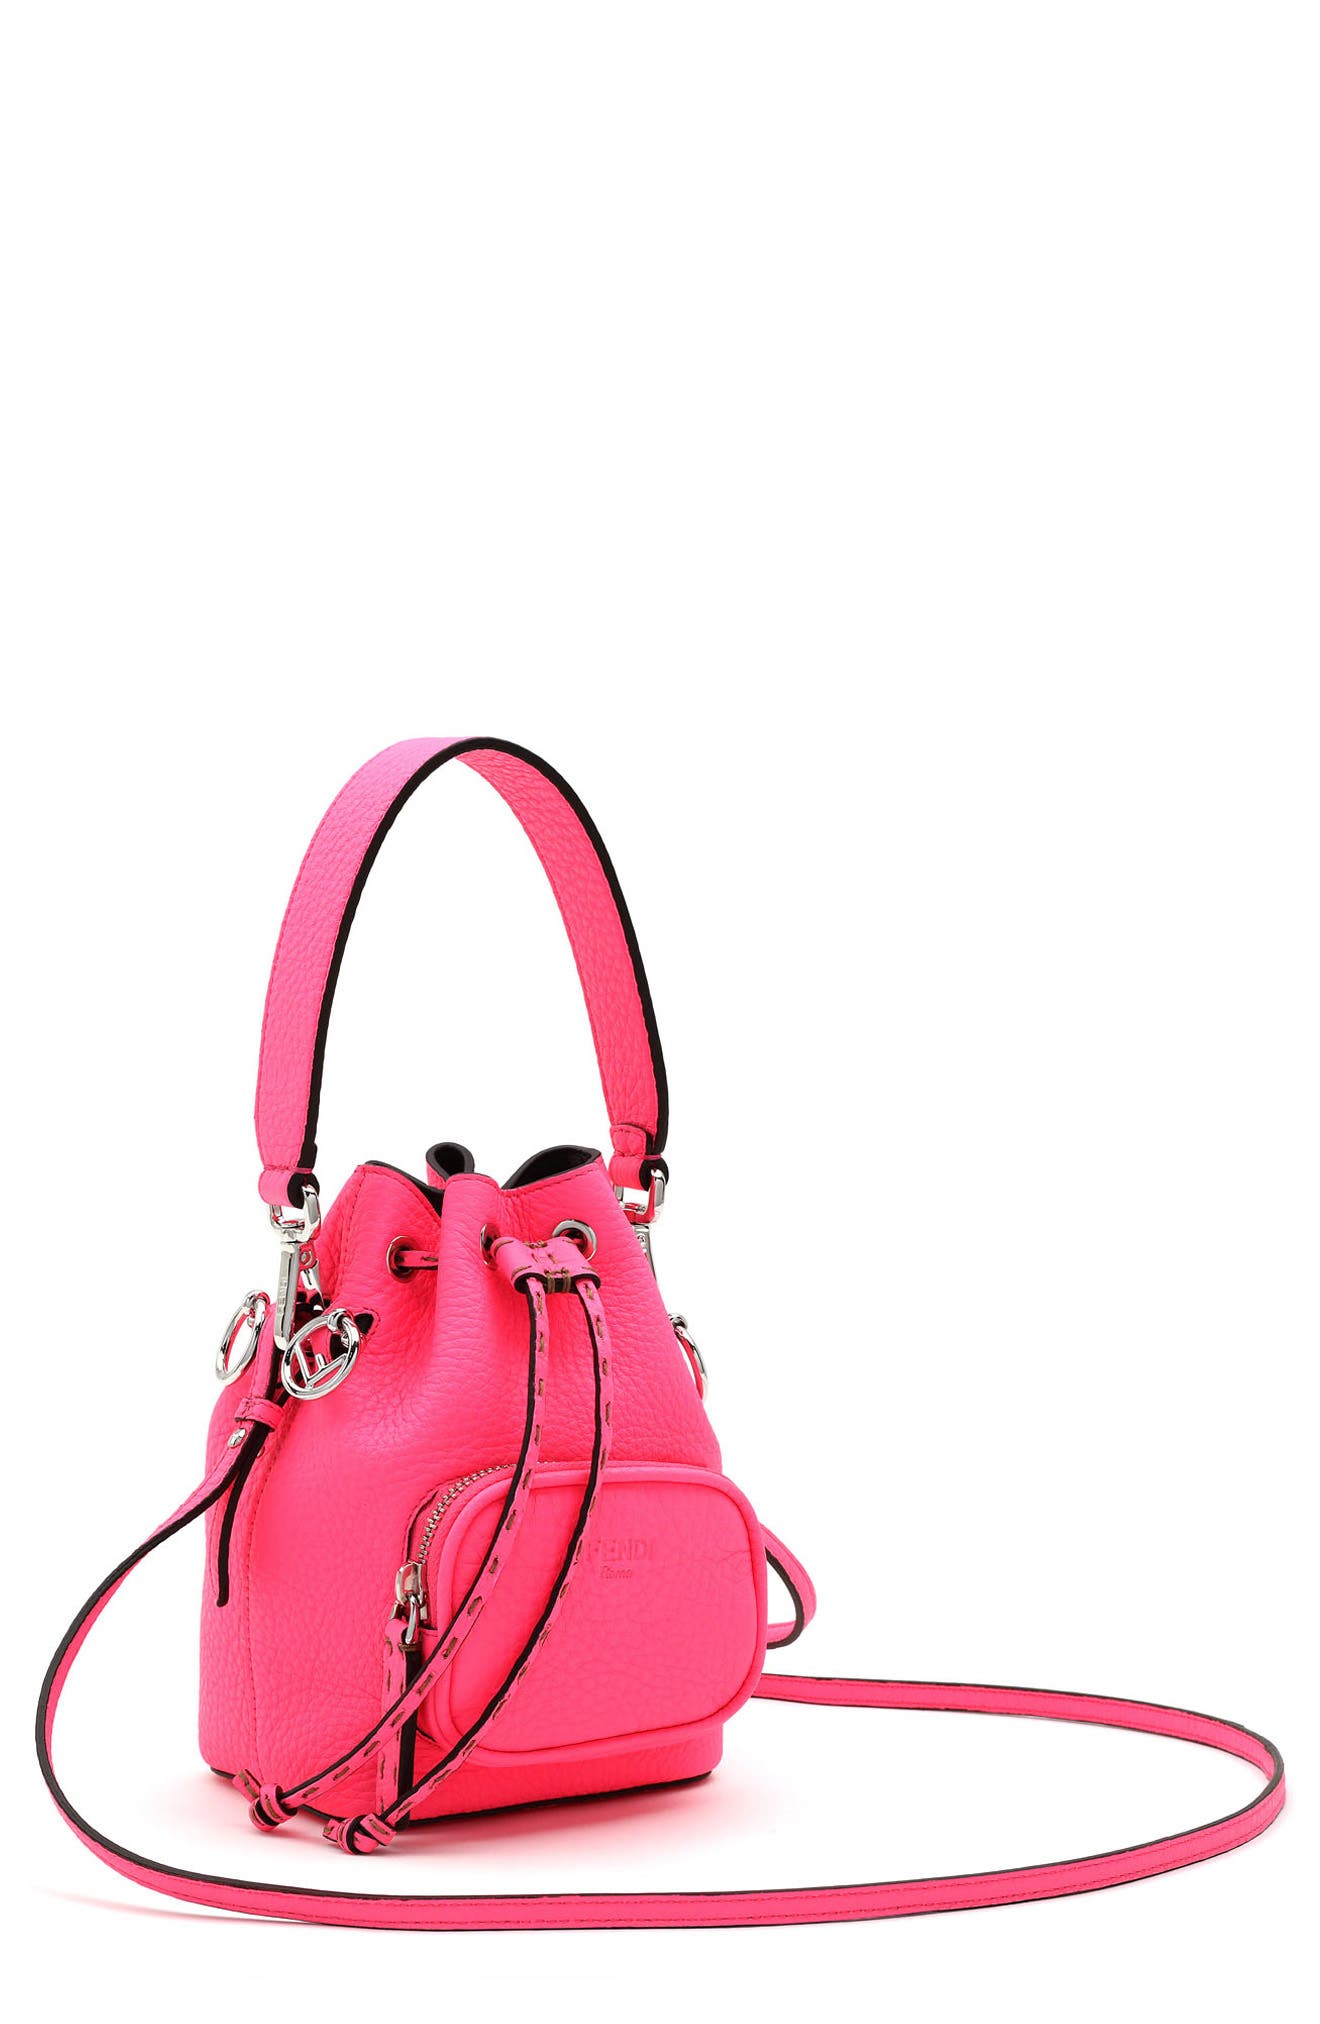 fendi hot pink bag